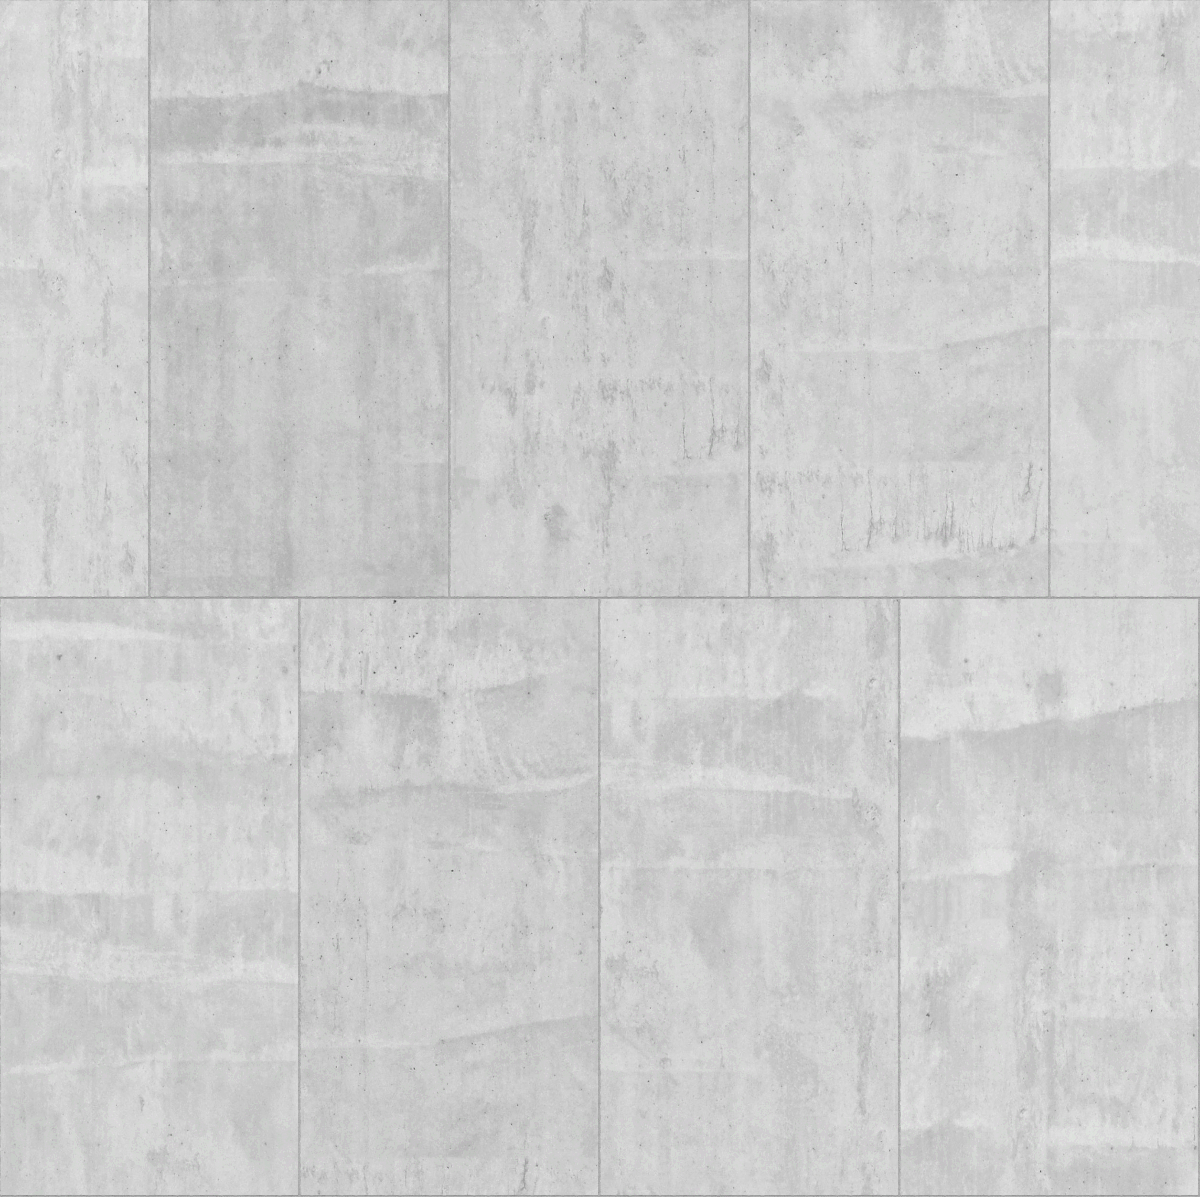 A seamless concrete texture with in situ concrete blocks arranged in a Stretcher pattern